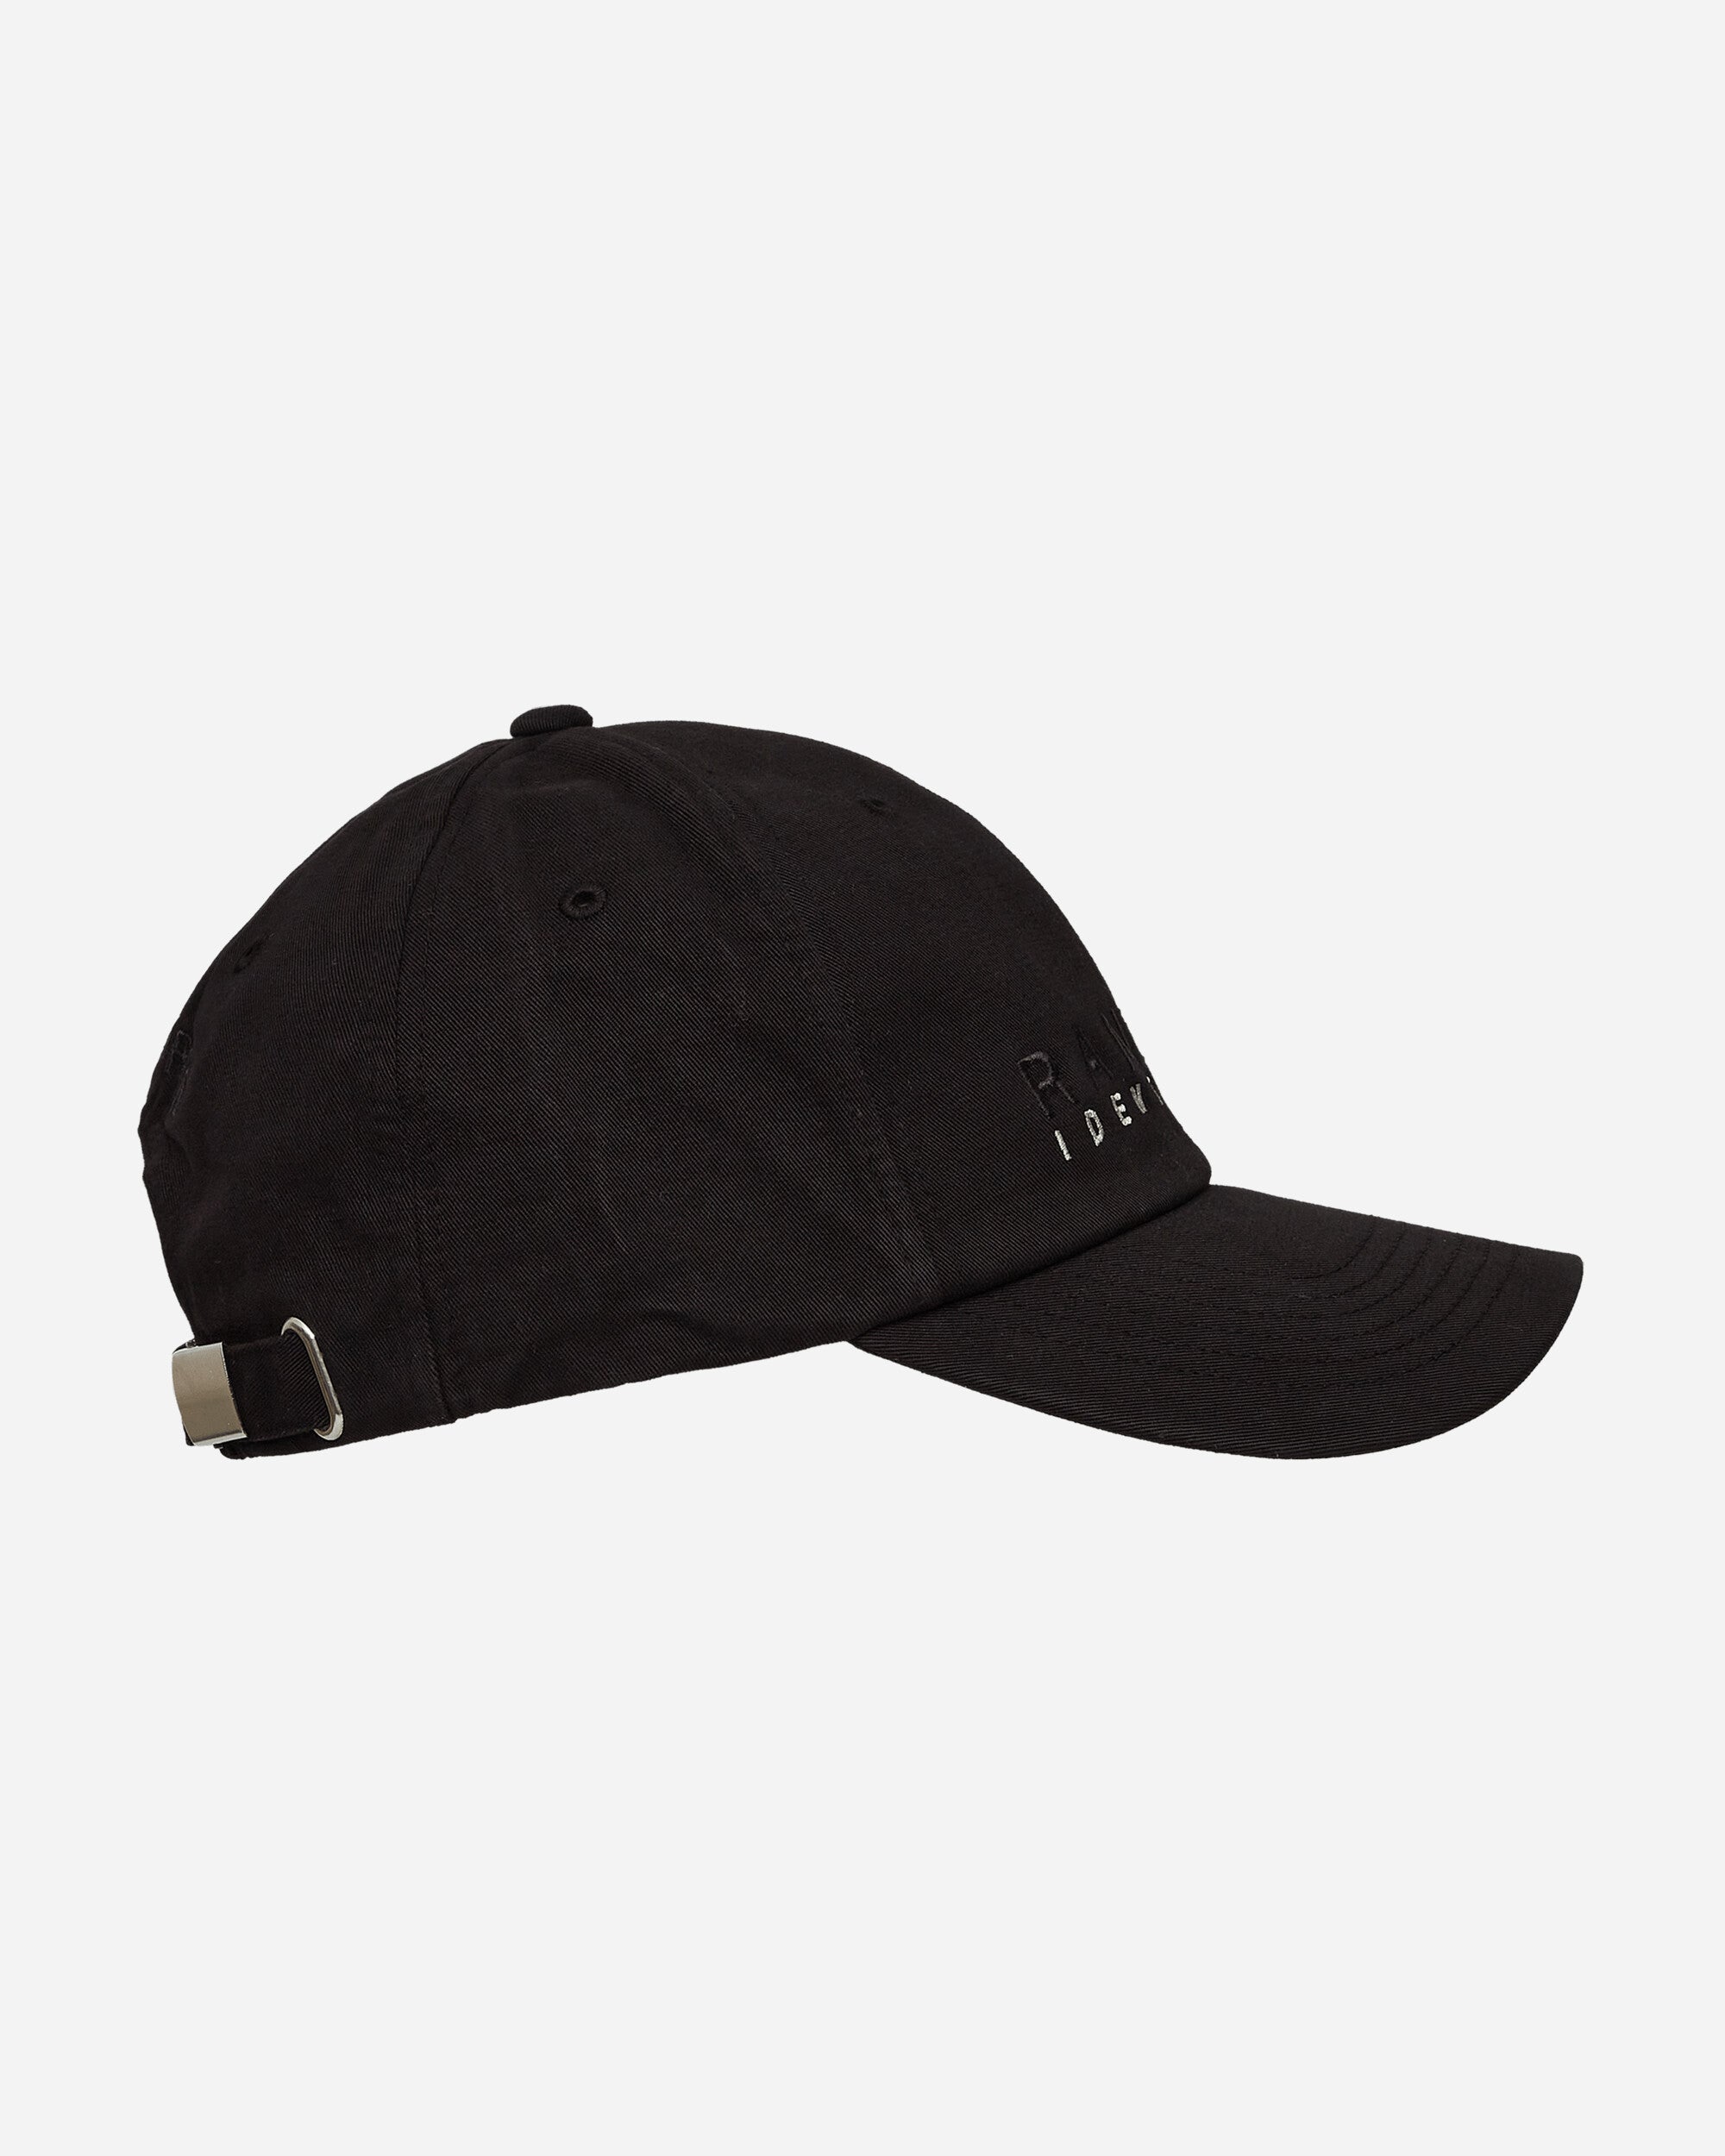 Random Identities Sponsored Baseball Cap Black/Beige Hats Caps RAN03K104  001